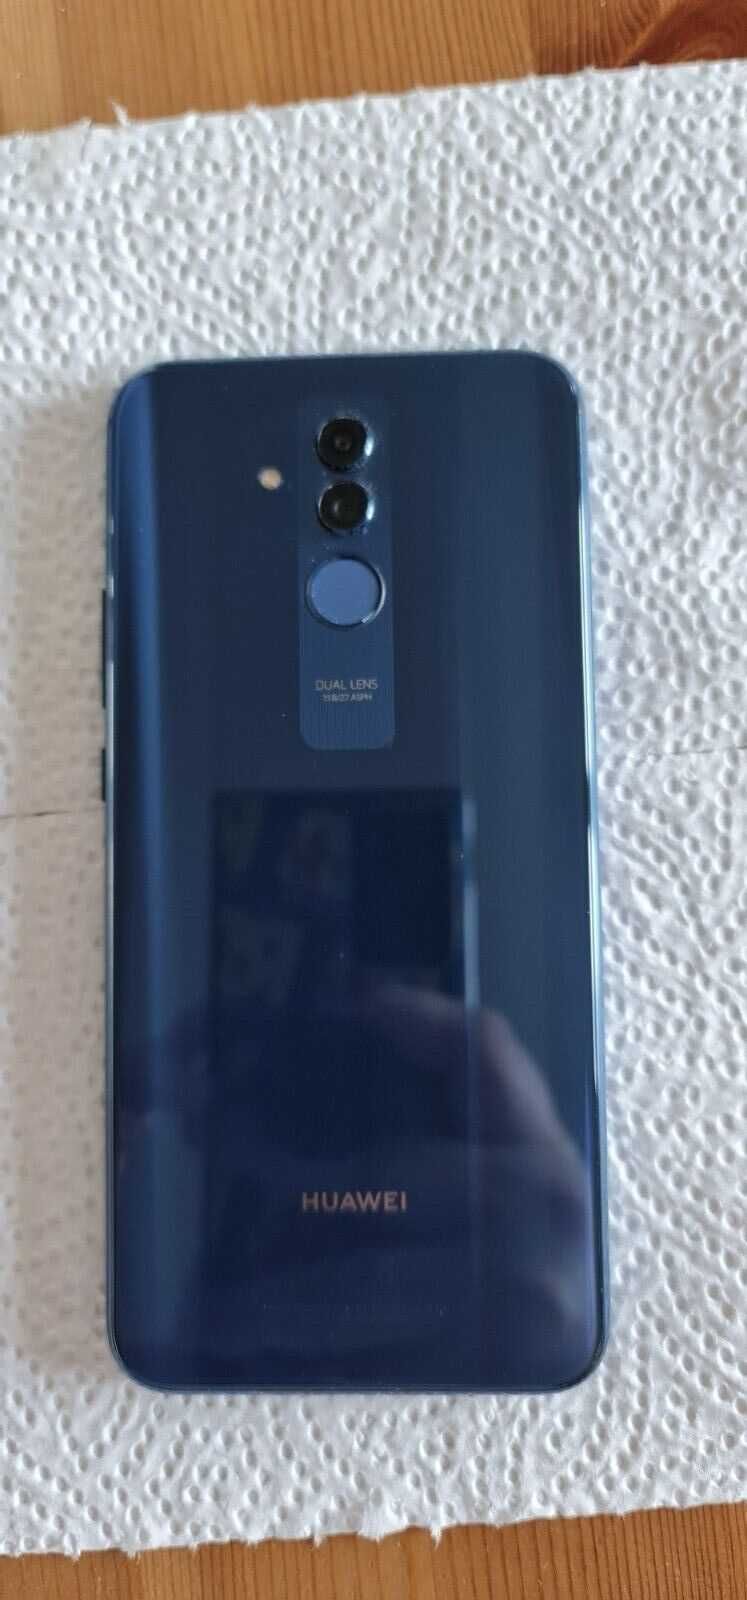 Huawei Mate 20 lite SNE-LX1 - 64GB